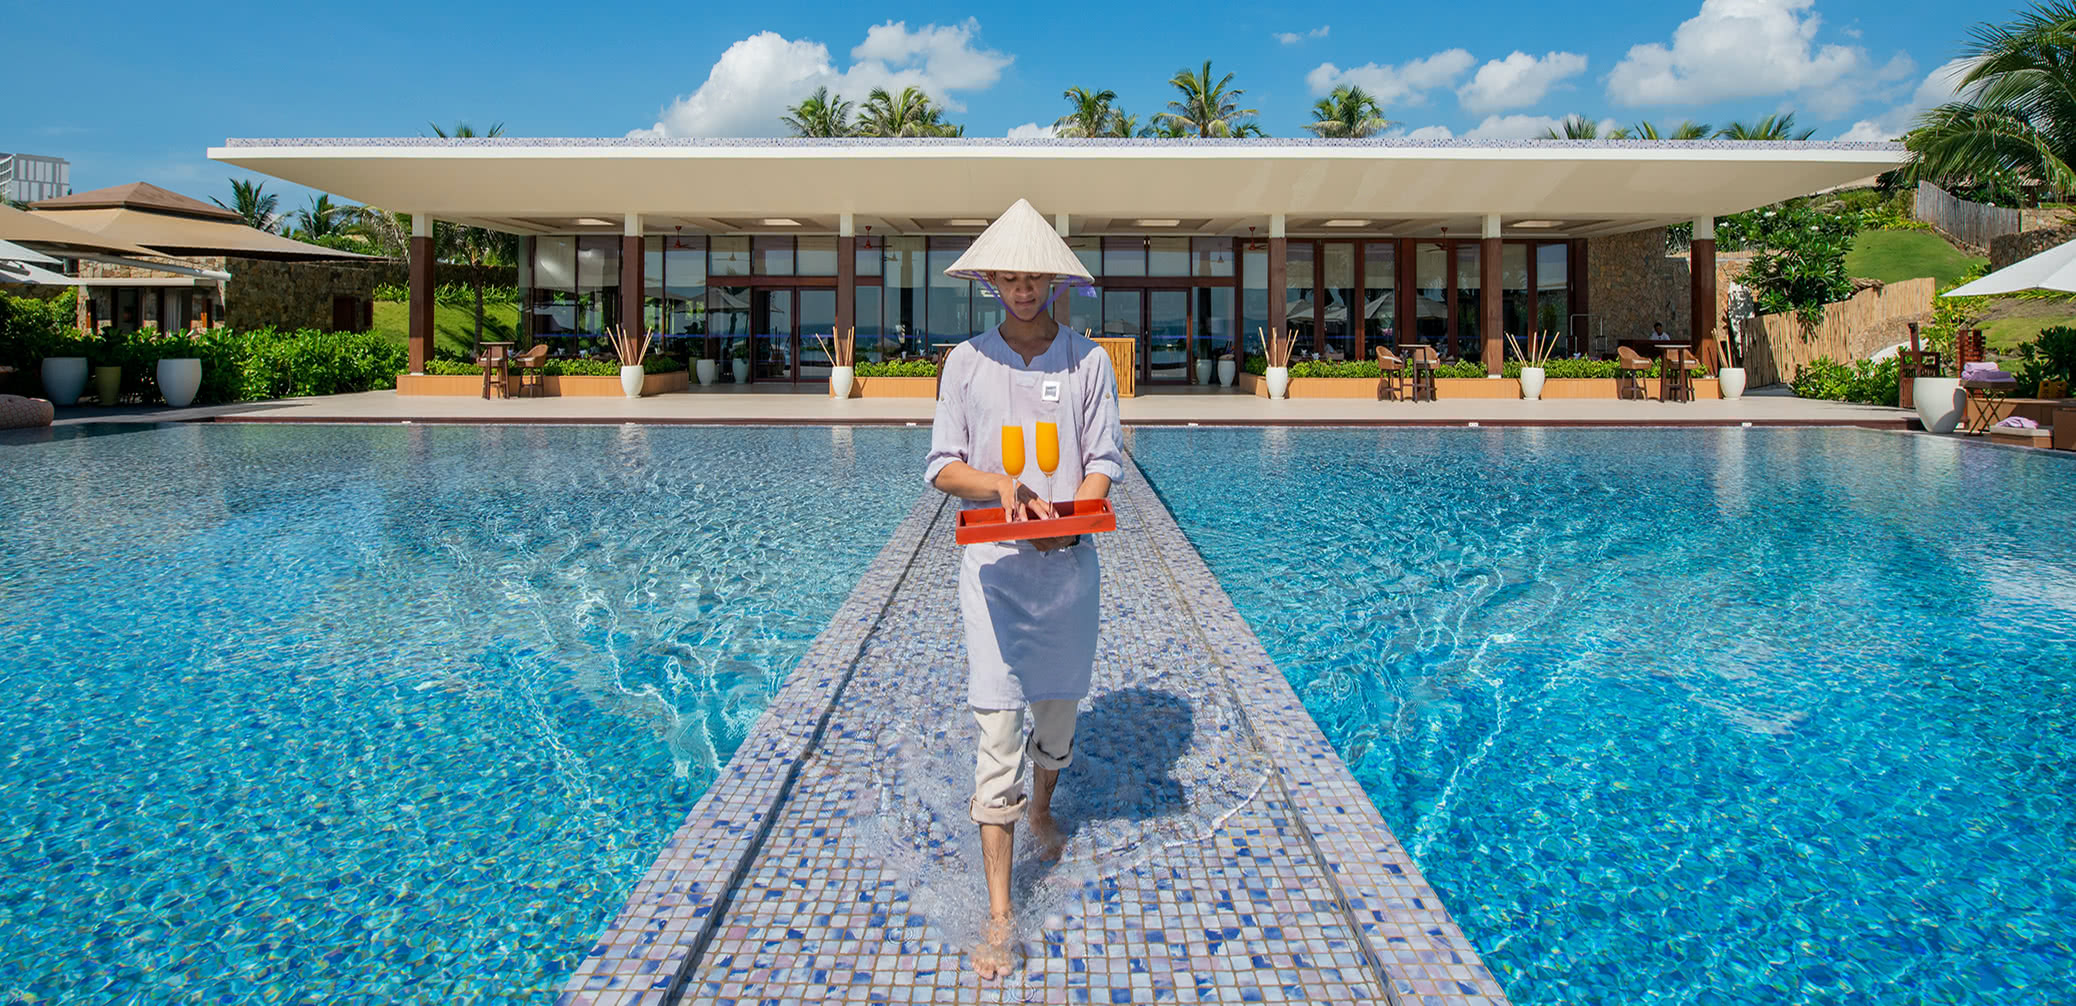 Top 10 Best Luxury Hotels And Resorts in Vietnam